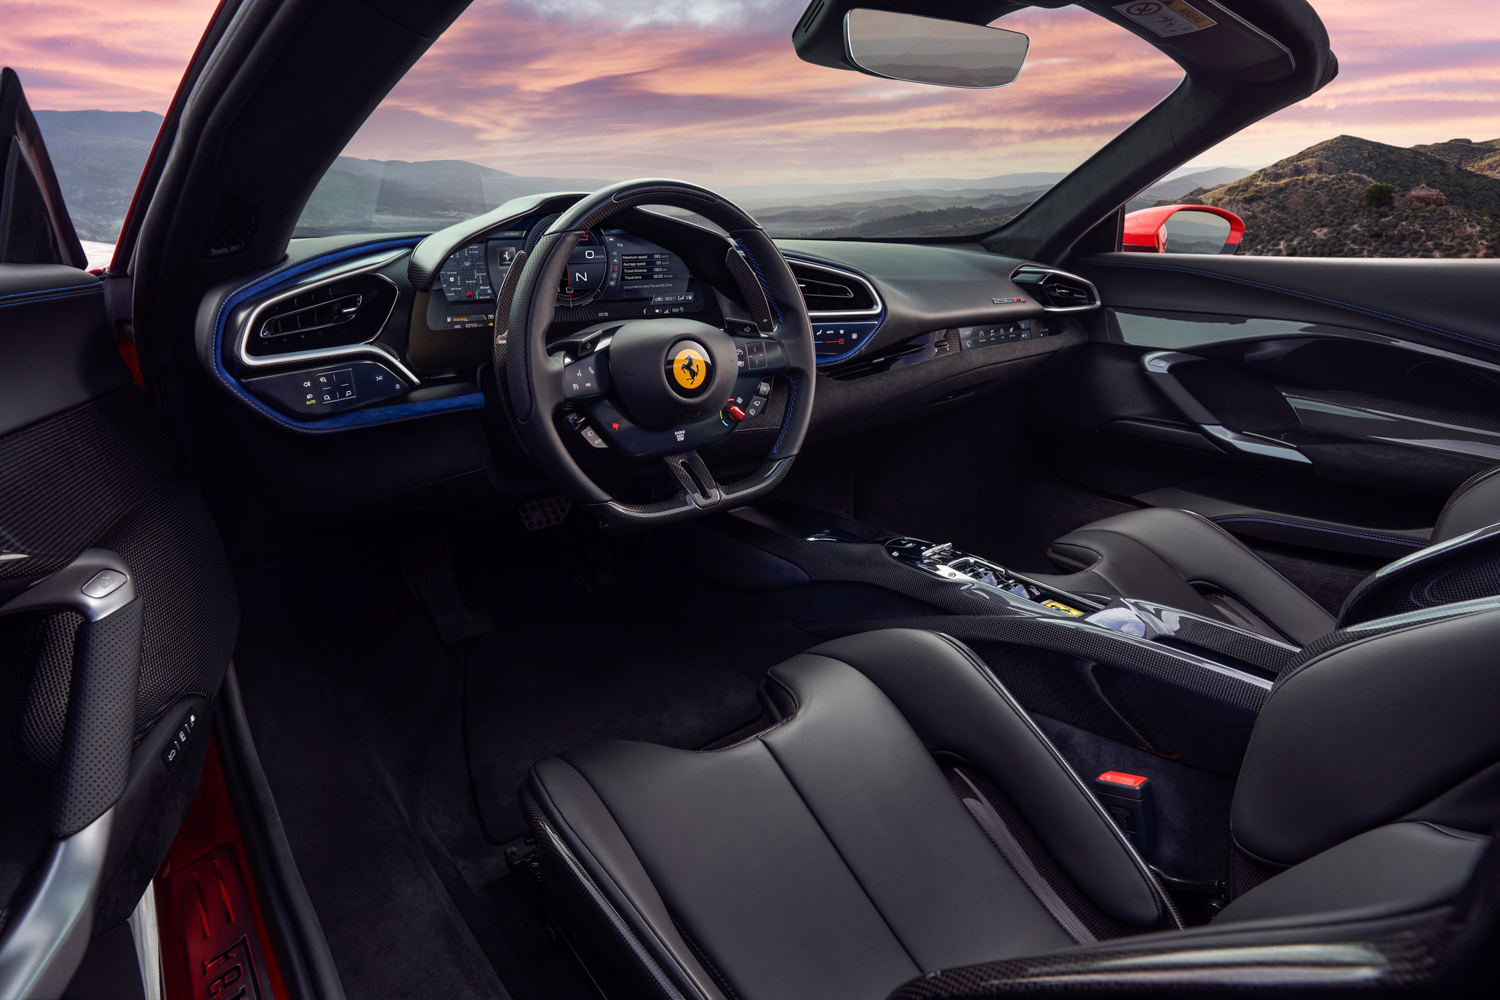 Convertible Ferrari 296 GTS unveiled